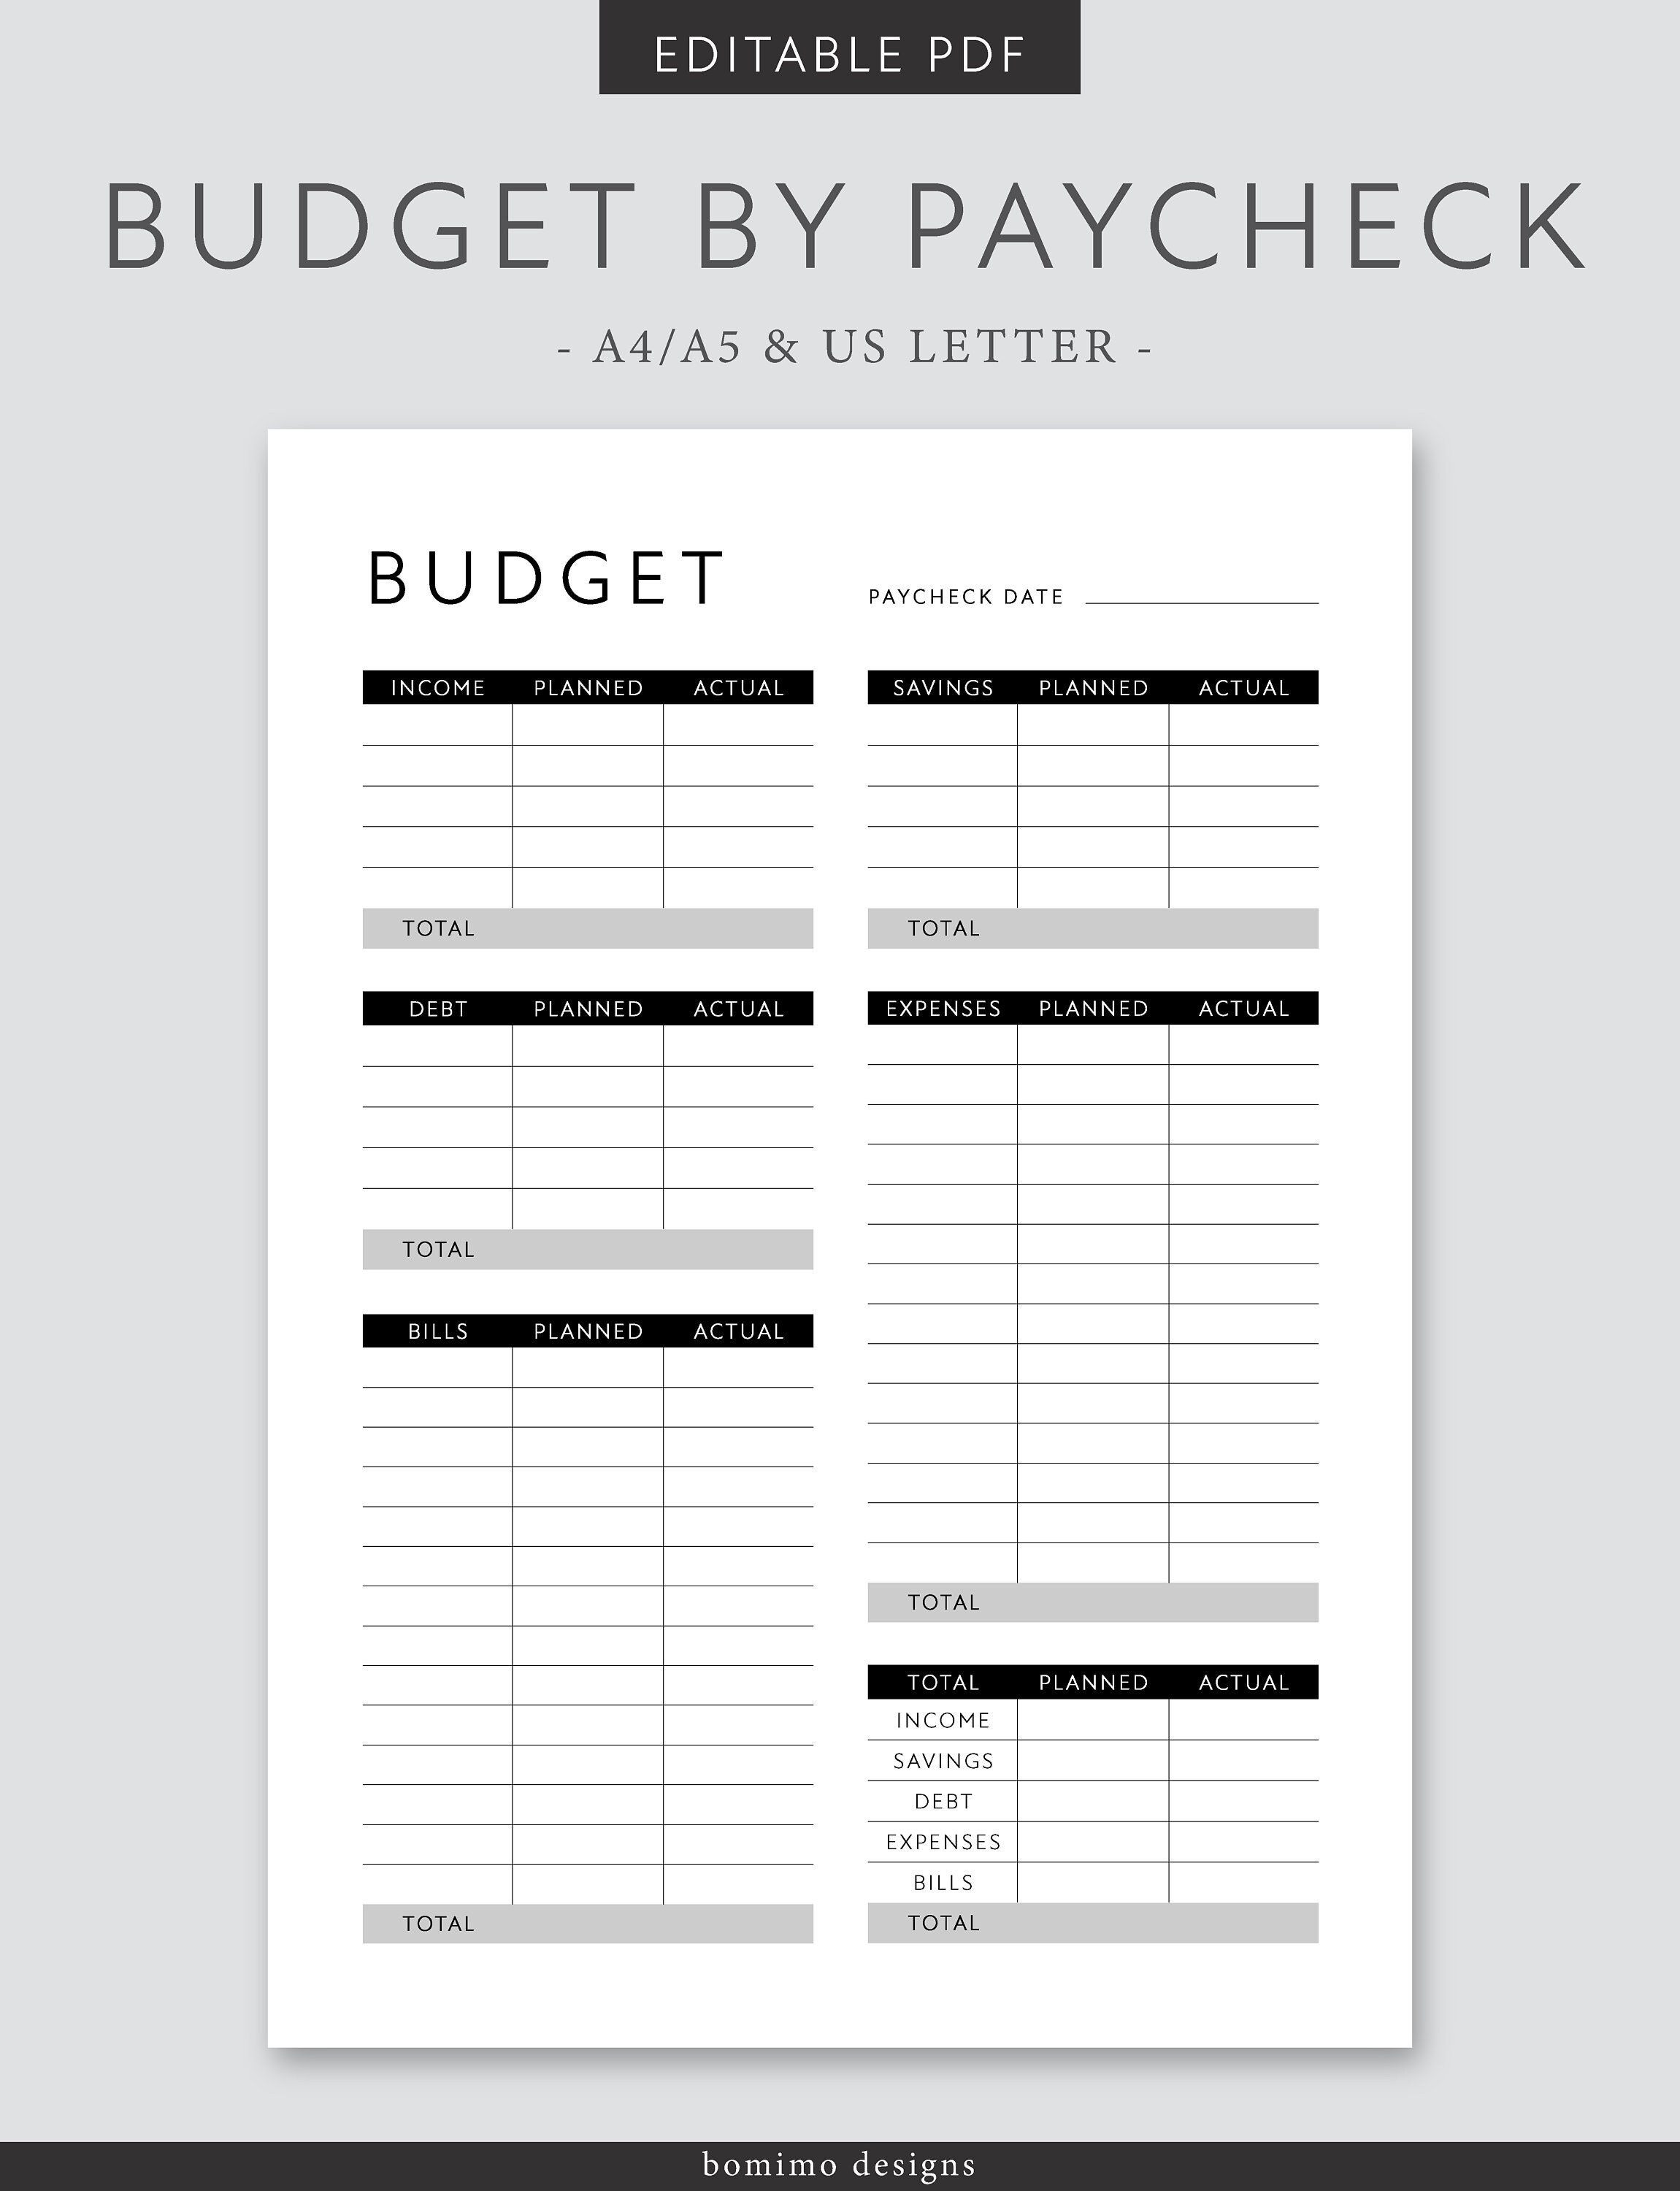 paycheck-budget-printable-pdf-budget-by-paycheck-editable-etsy